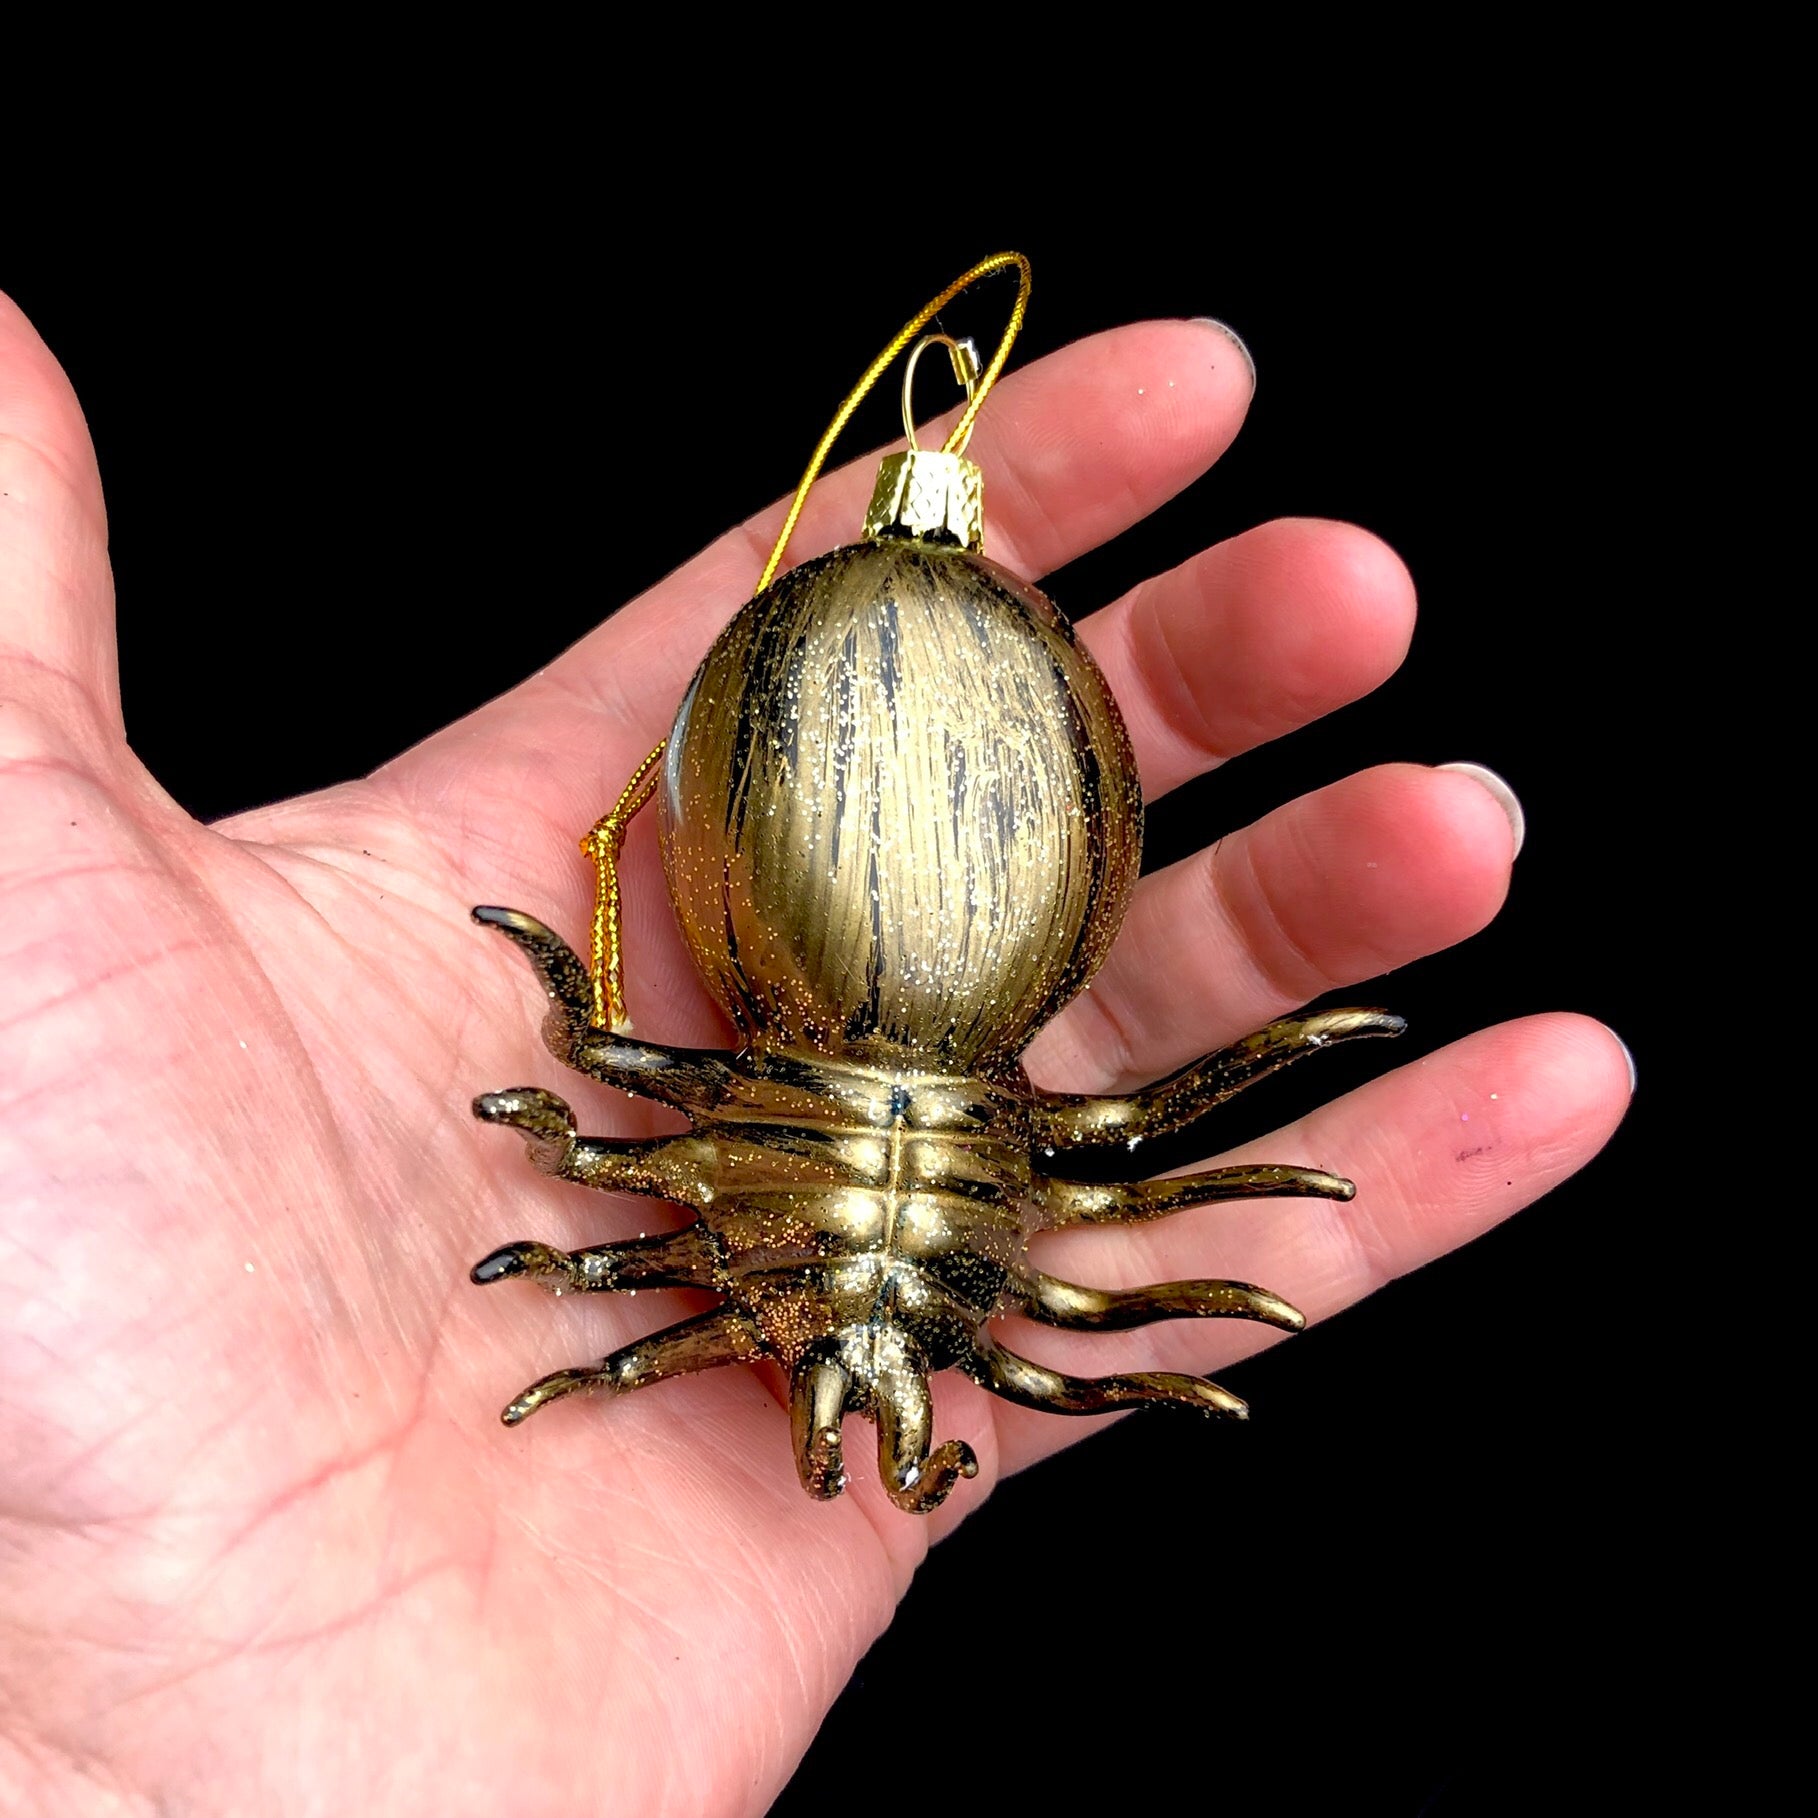 Underside of Spider Ornament shown in hand